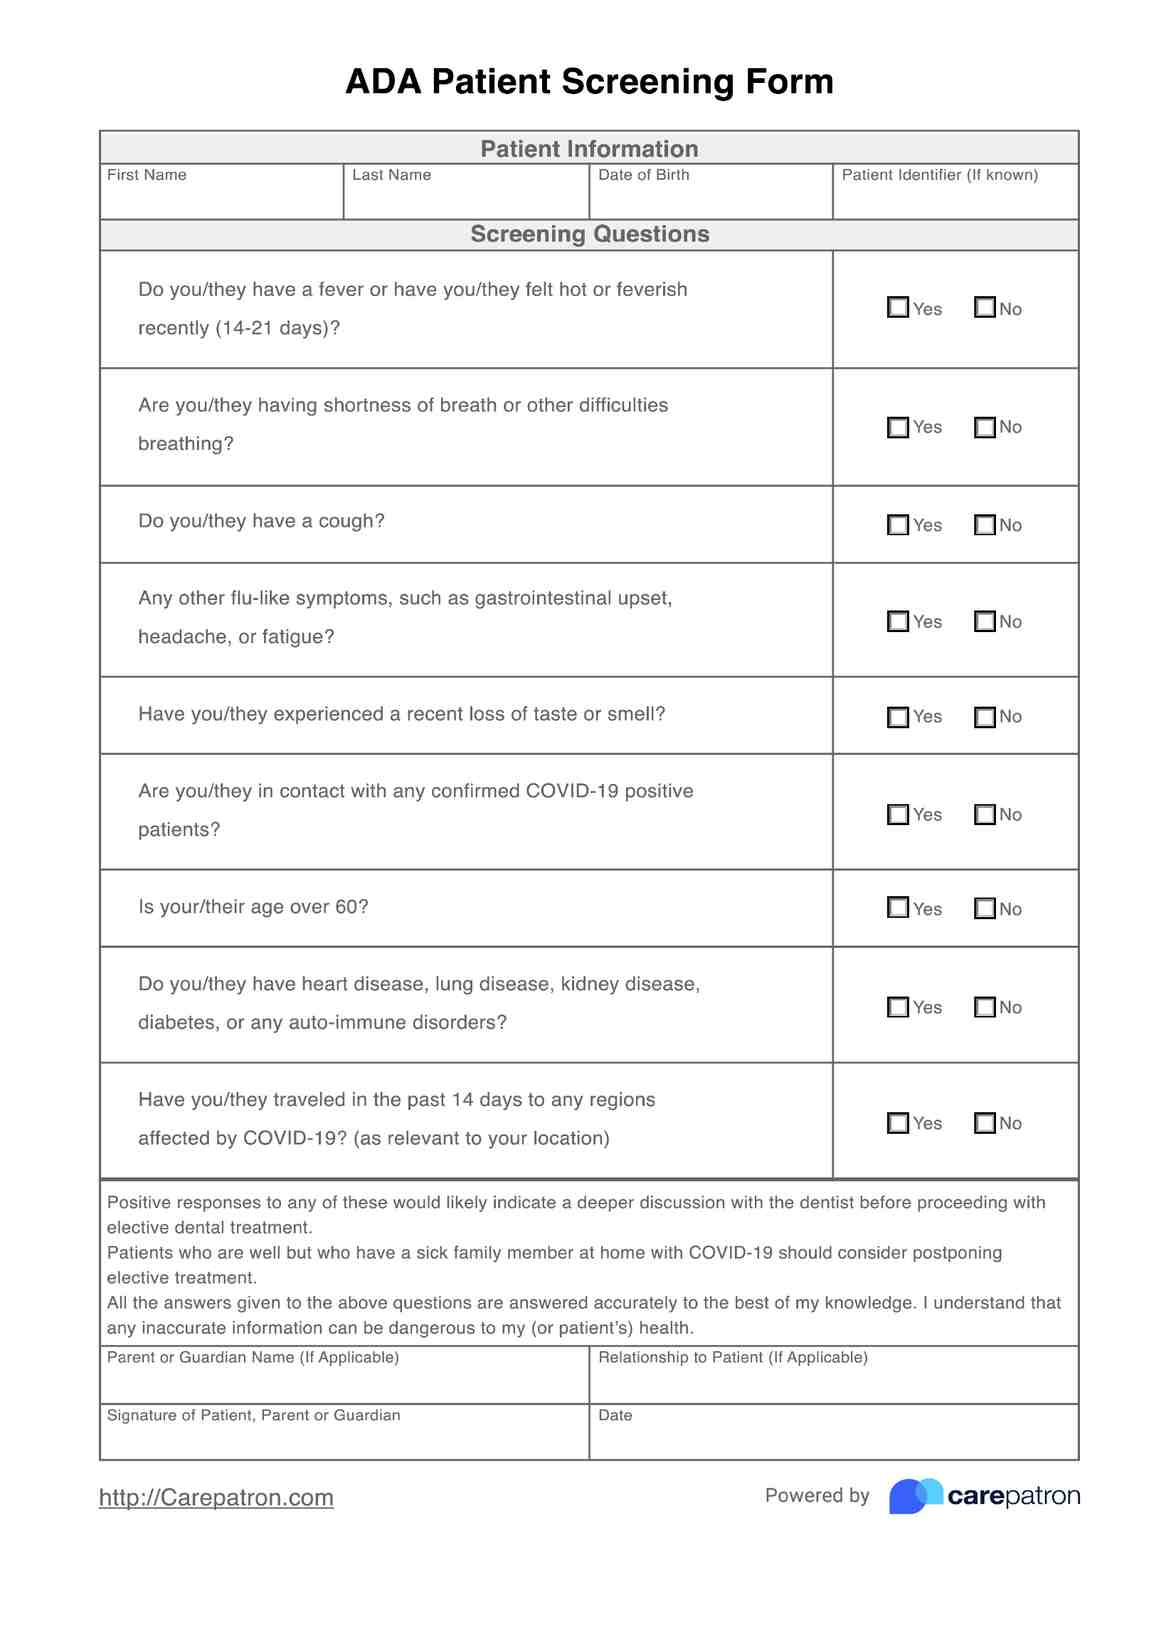 ADA Patient Screening Form PDF Example